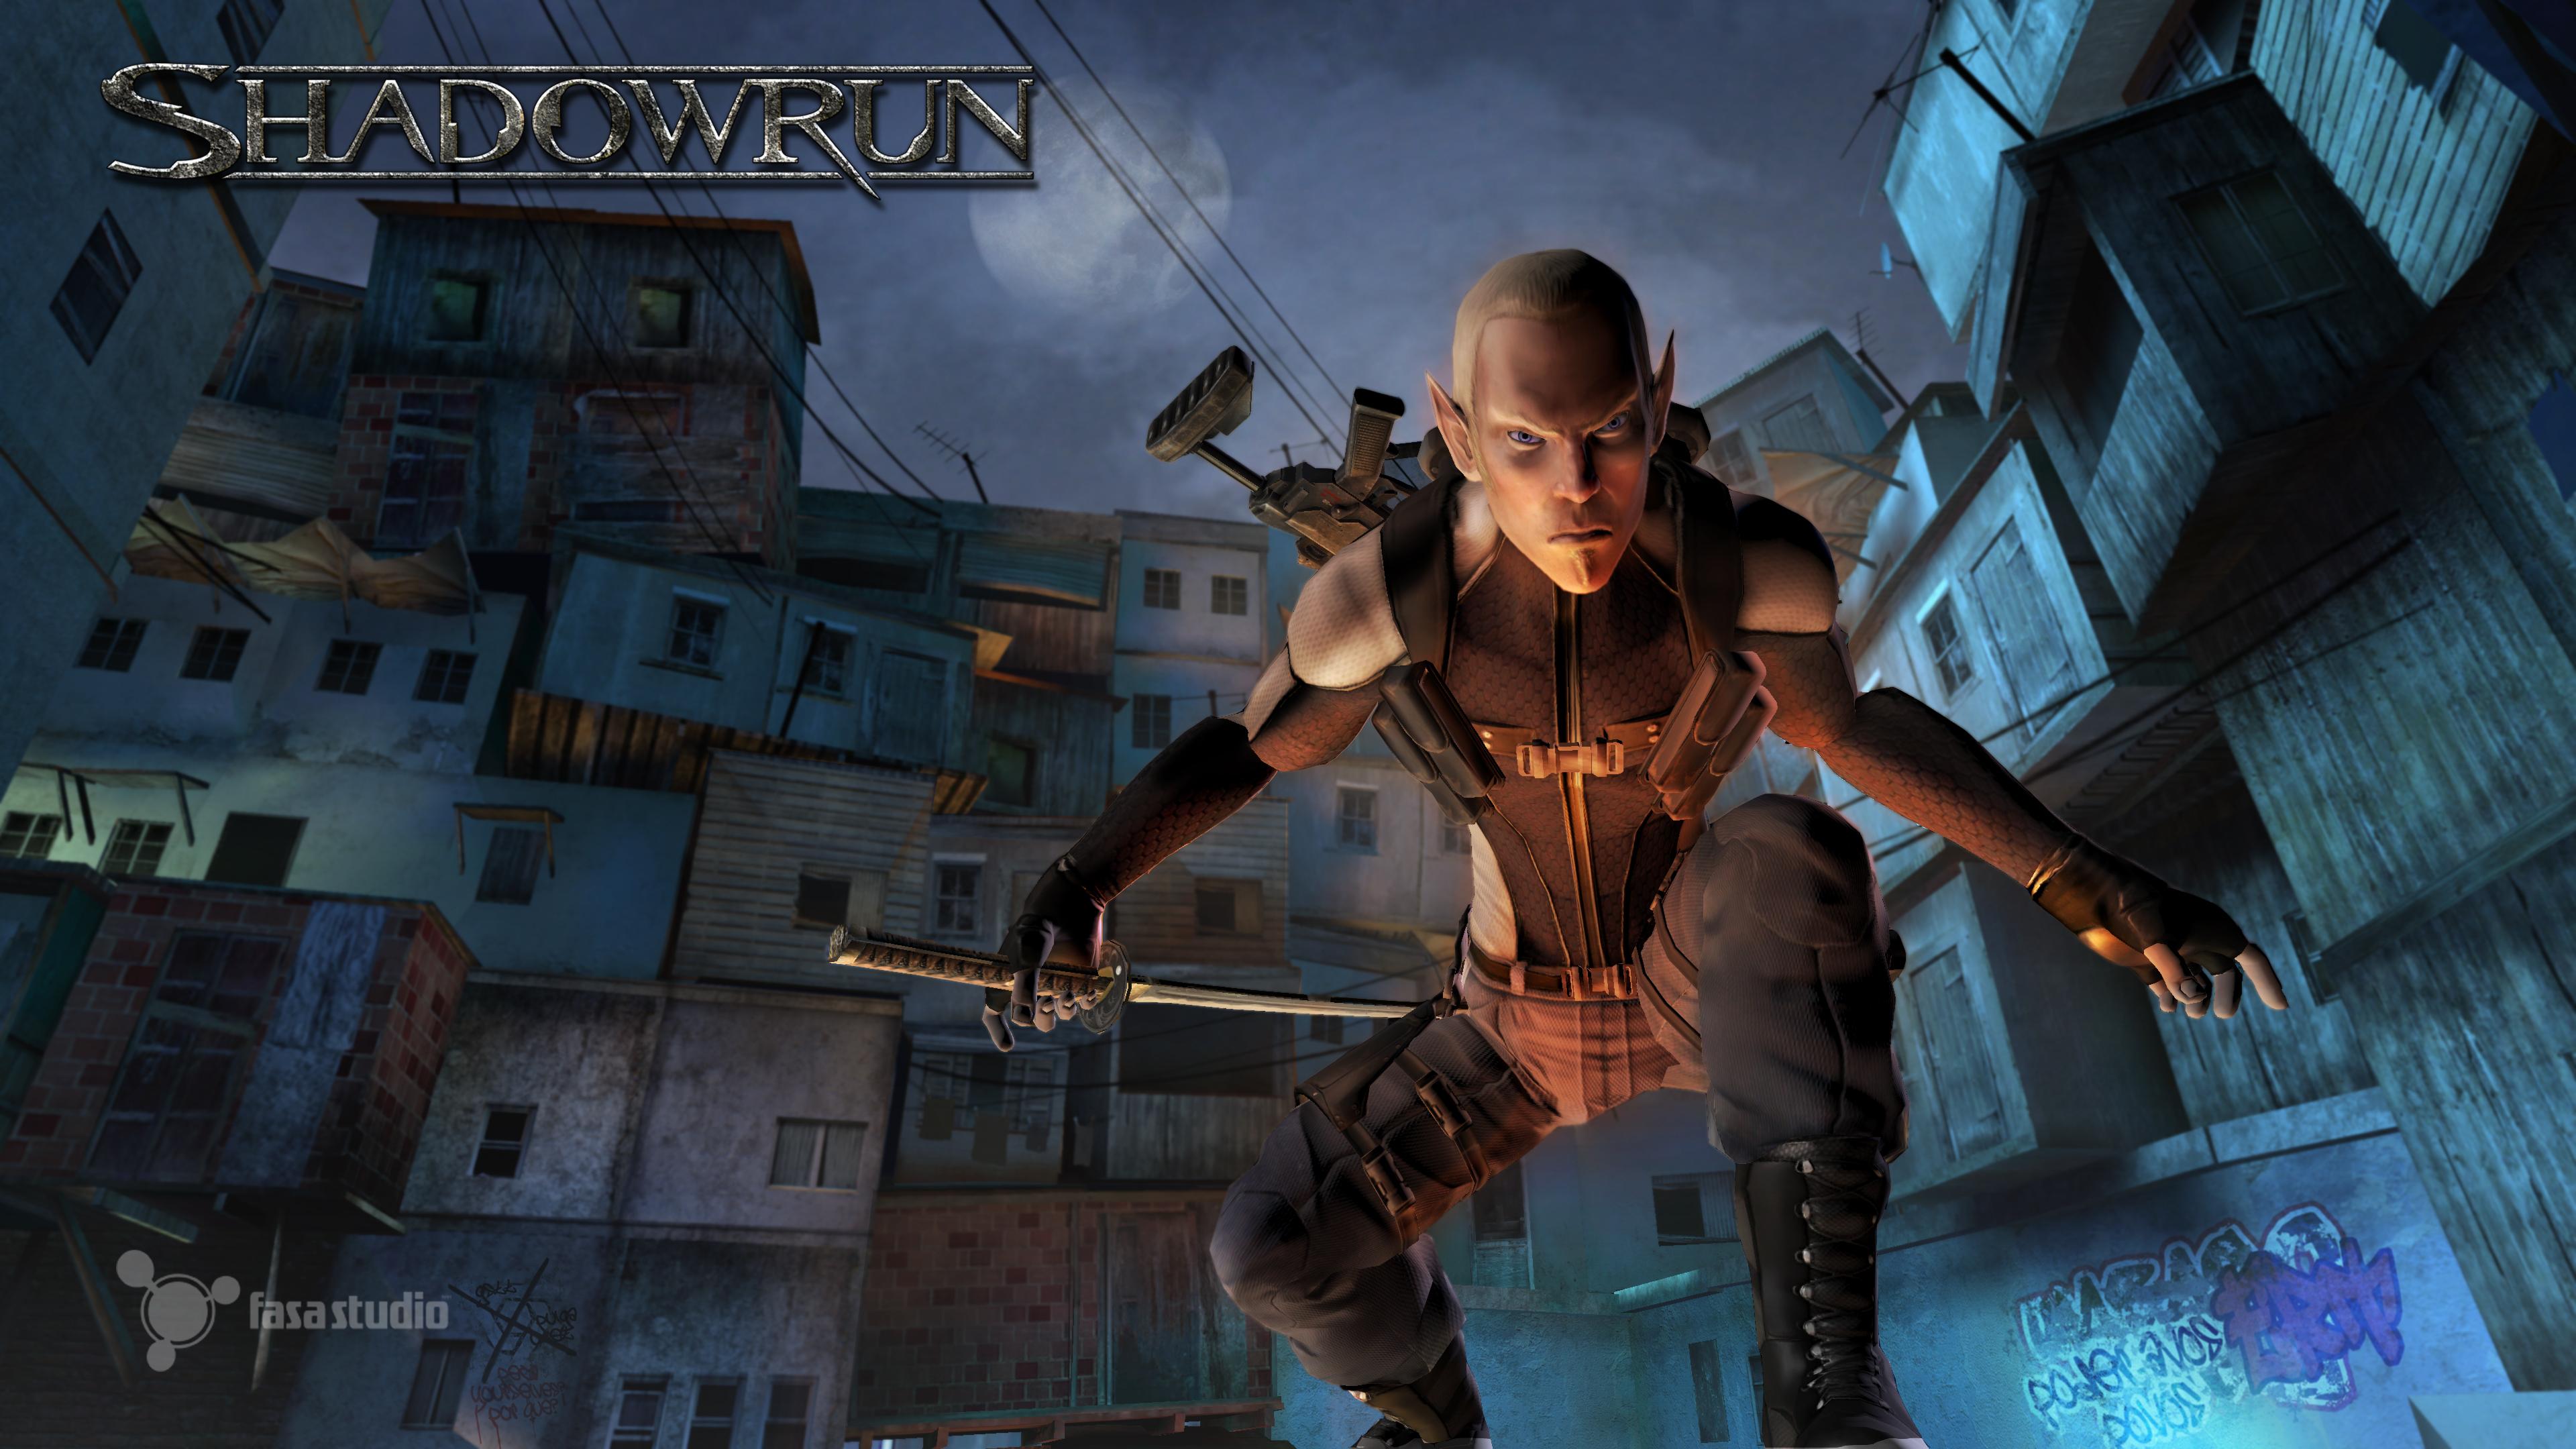 Shadowrun Xbox 360 Gameplay - Maelstrom (HD) 